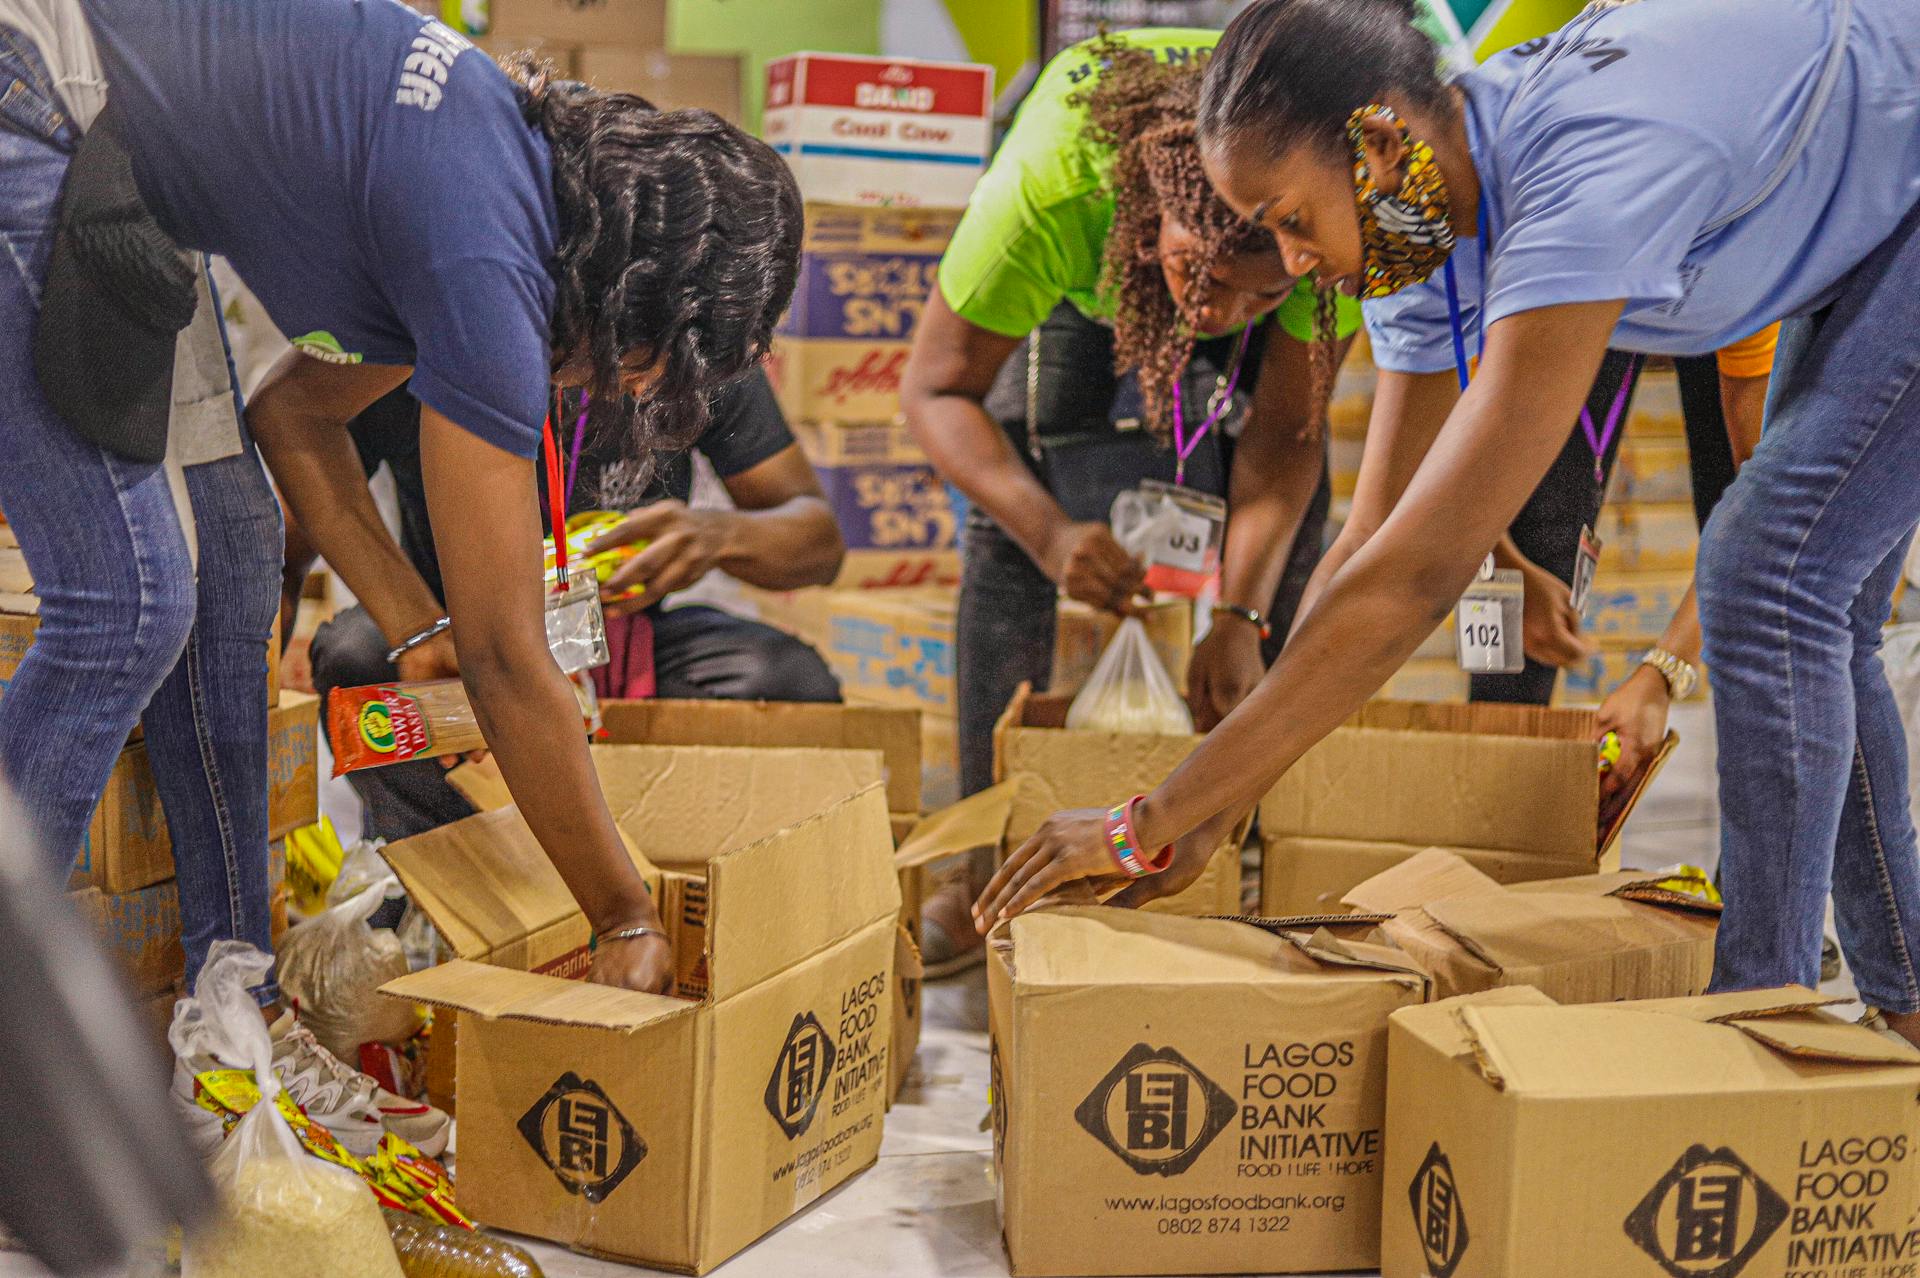 Volunteers at a food bank packing items inside cardboard boxes | Source: Pexels